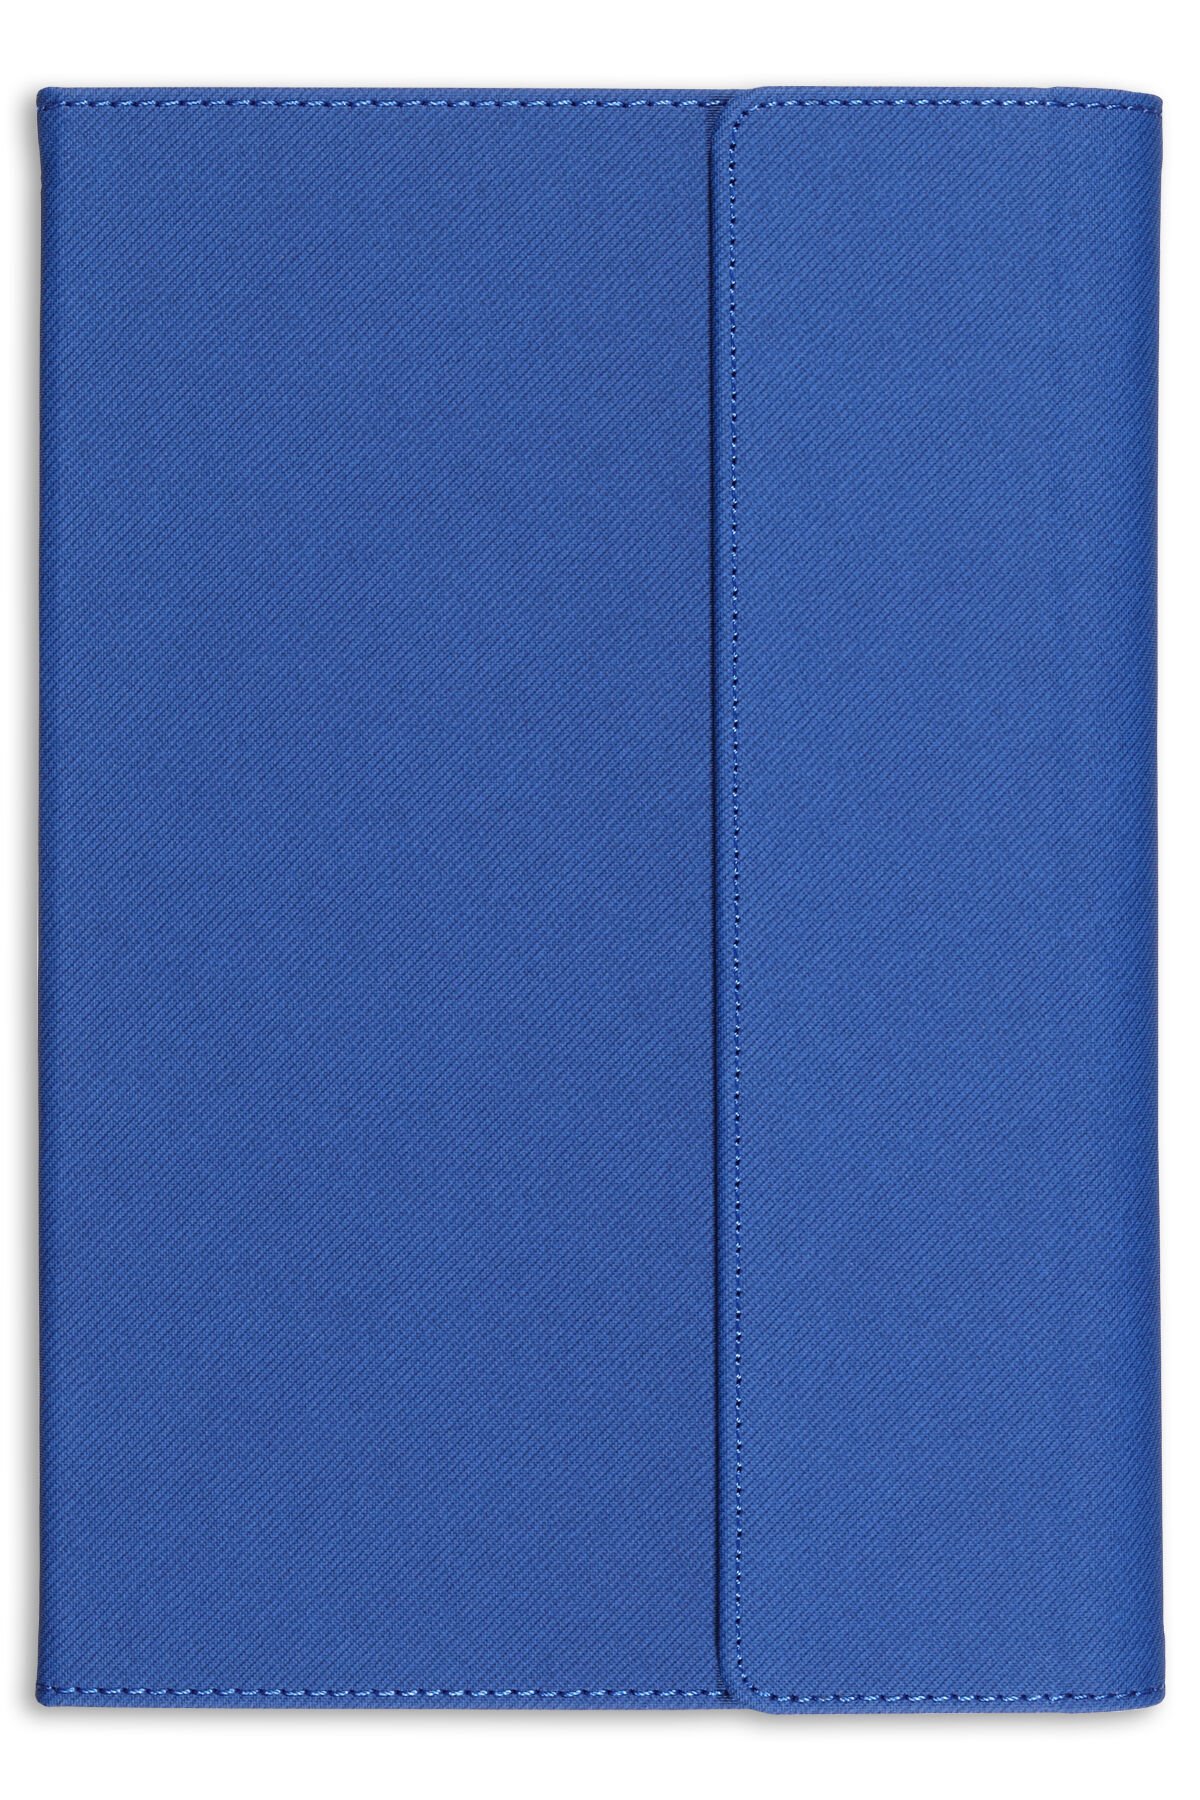 Matt Notebook A5 15x22 Mıknatıslı Kapak Defter Çizgili Mavi